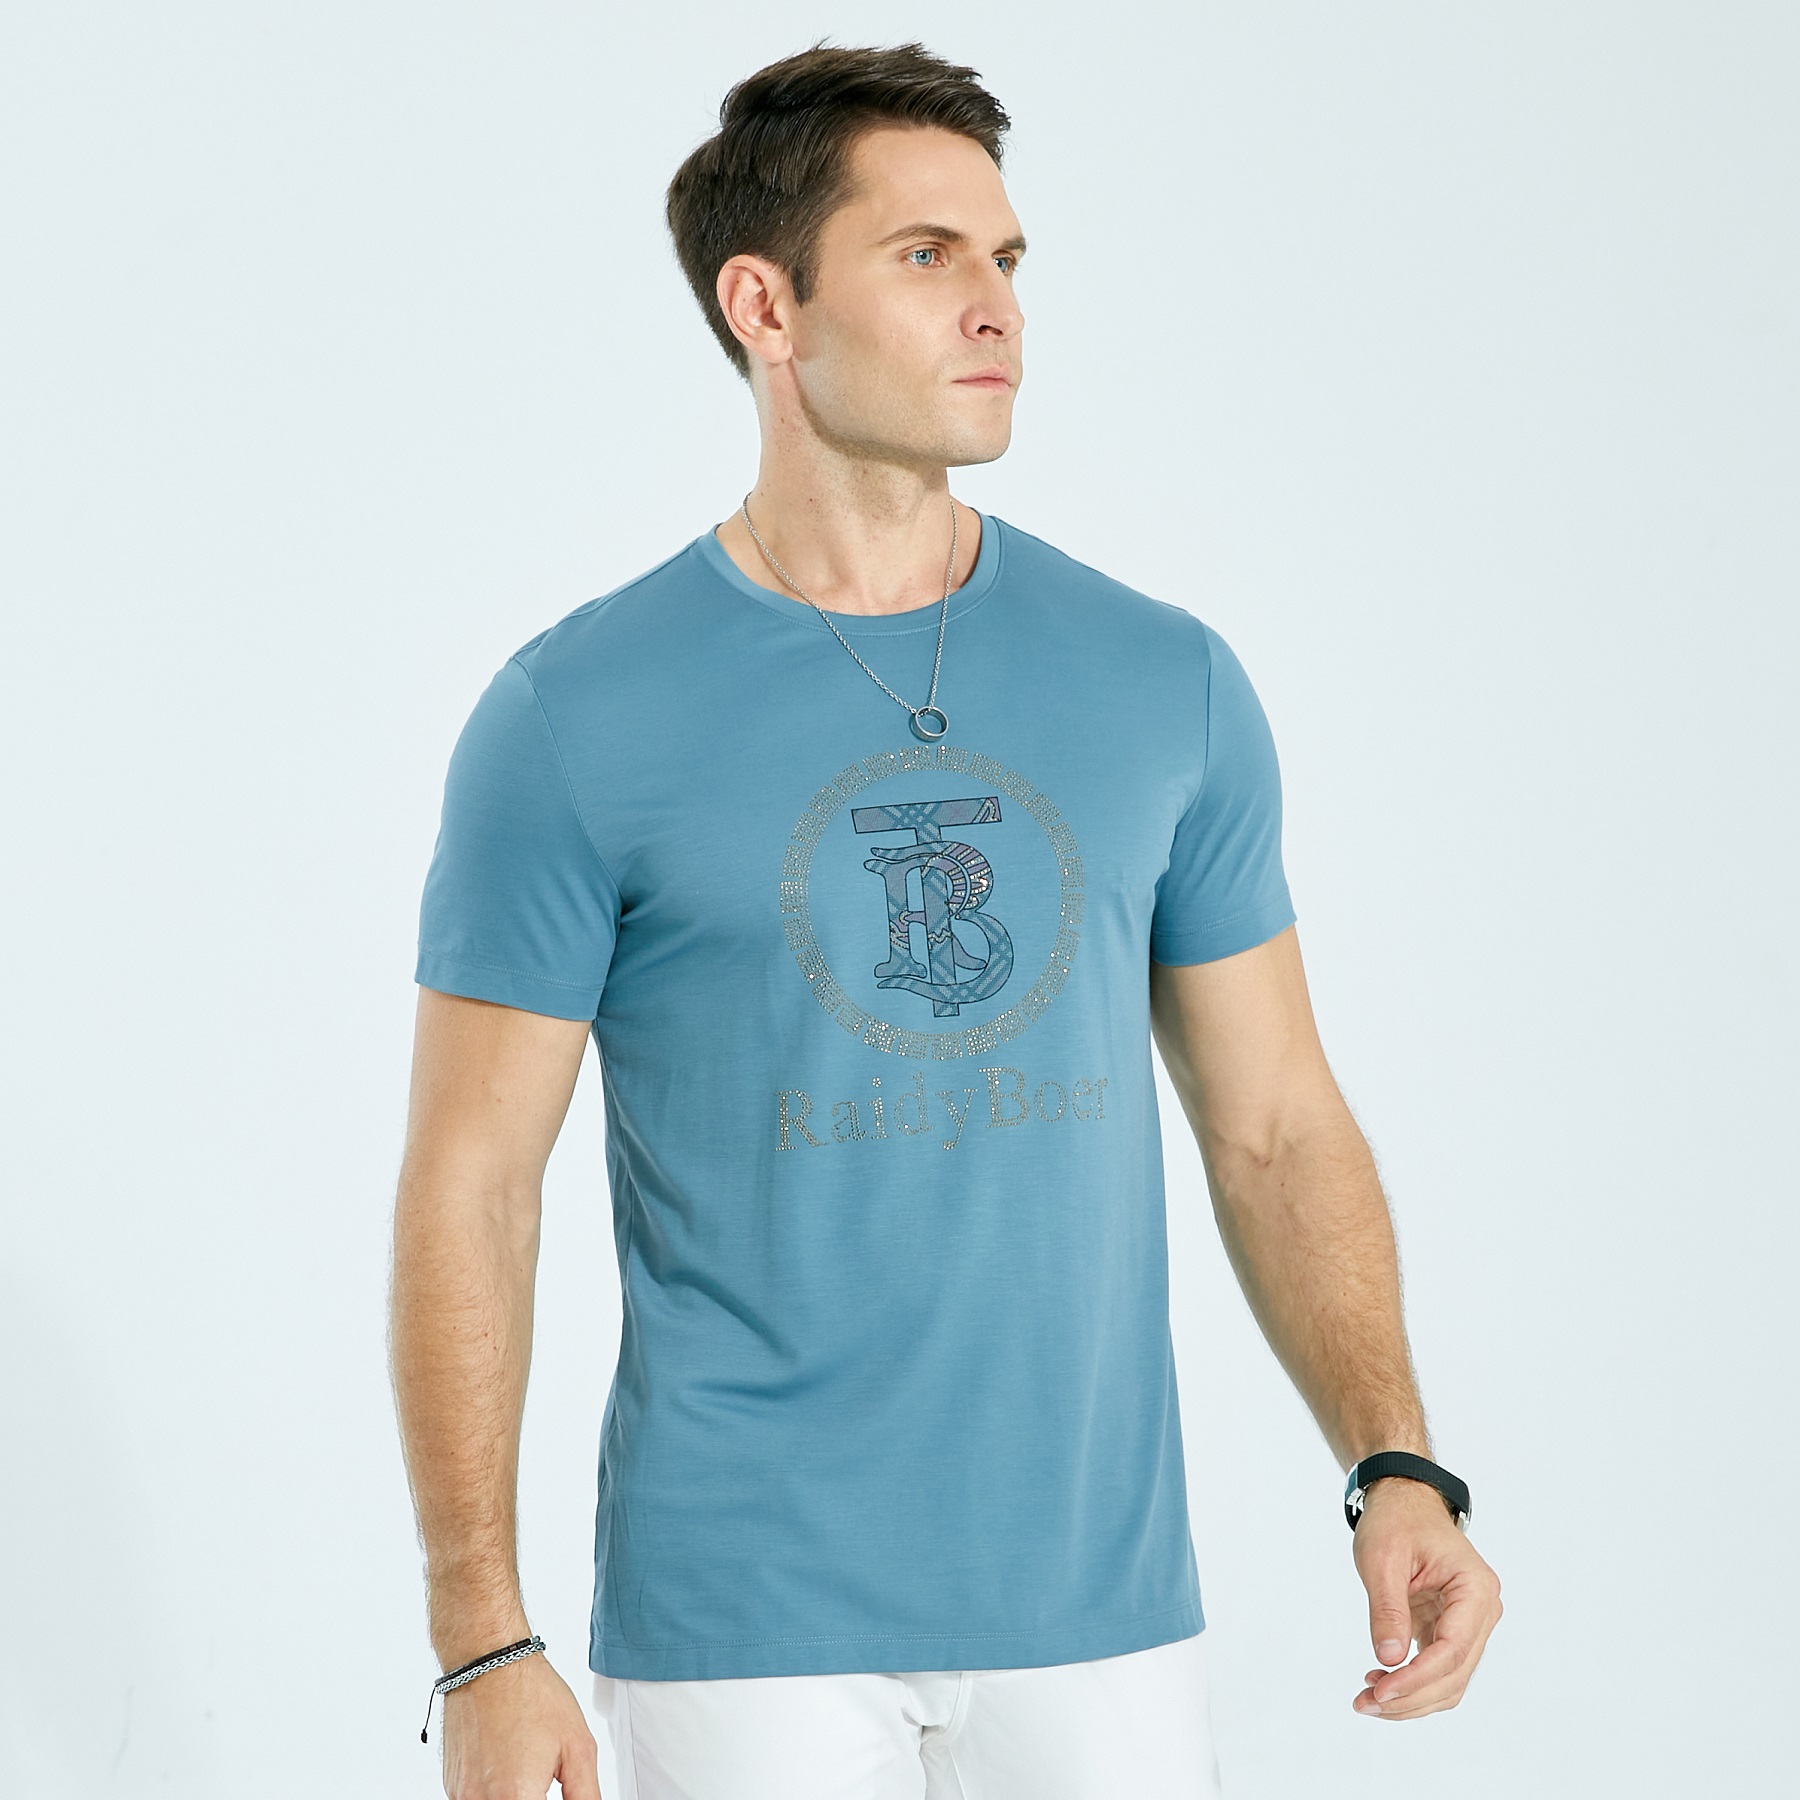 फ़ैक्टरी डायरेक्ट सेल उच्च गुणवत्ता वाली छोटी आस्तीन वाली टी-शर्ट गोल गर्दन वाली शर्ट पुरुषों की टी-शर्ट 100% कपास